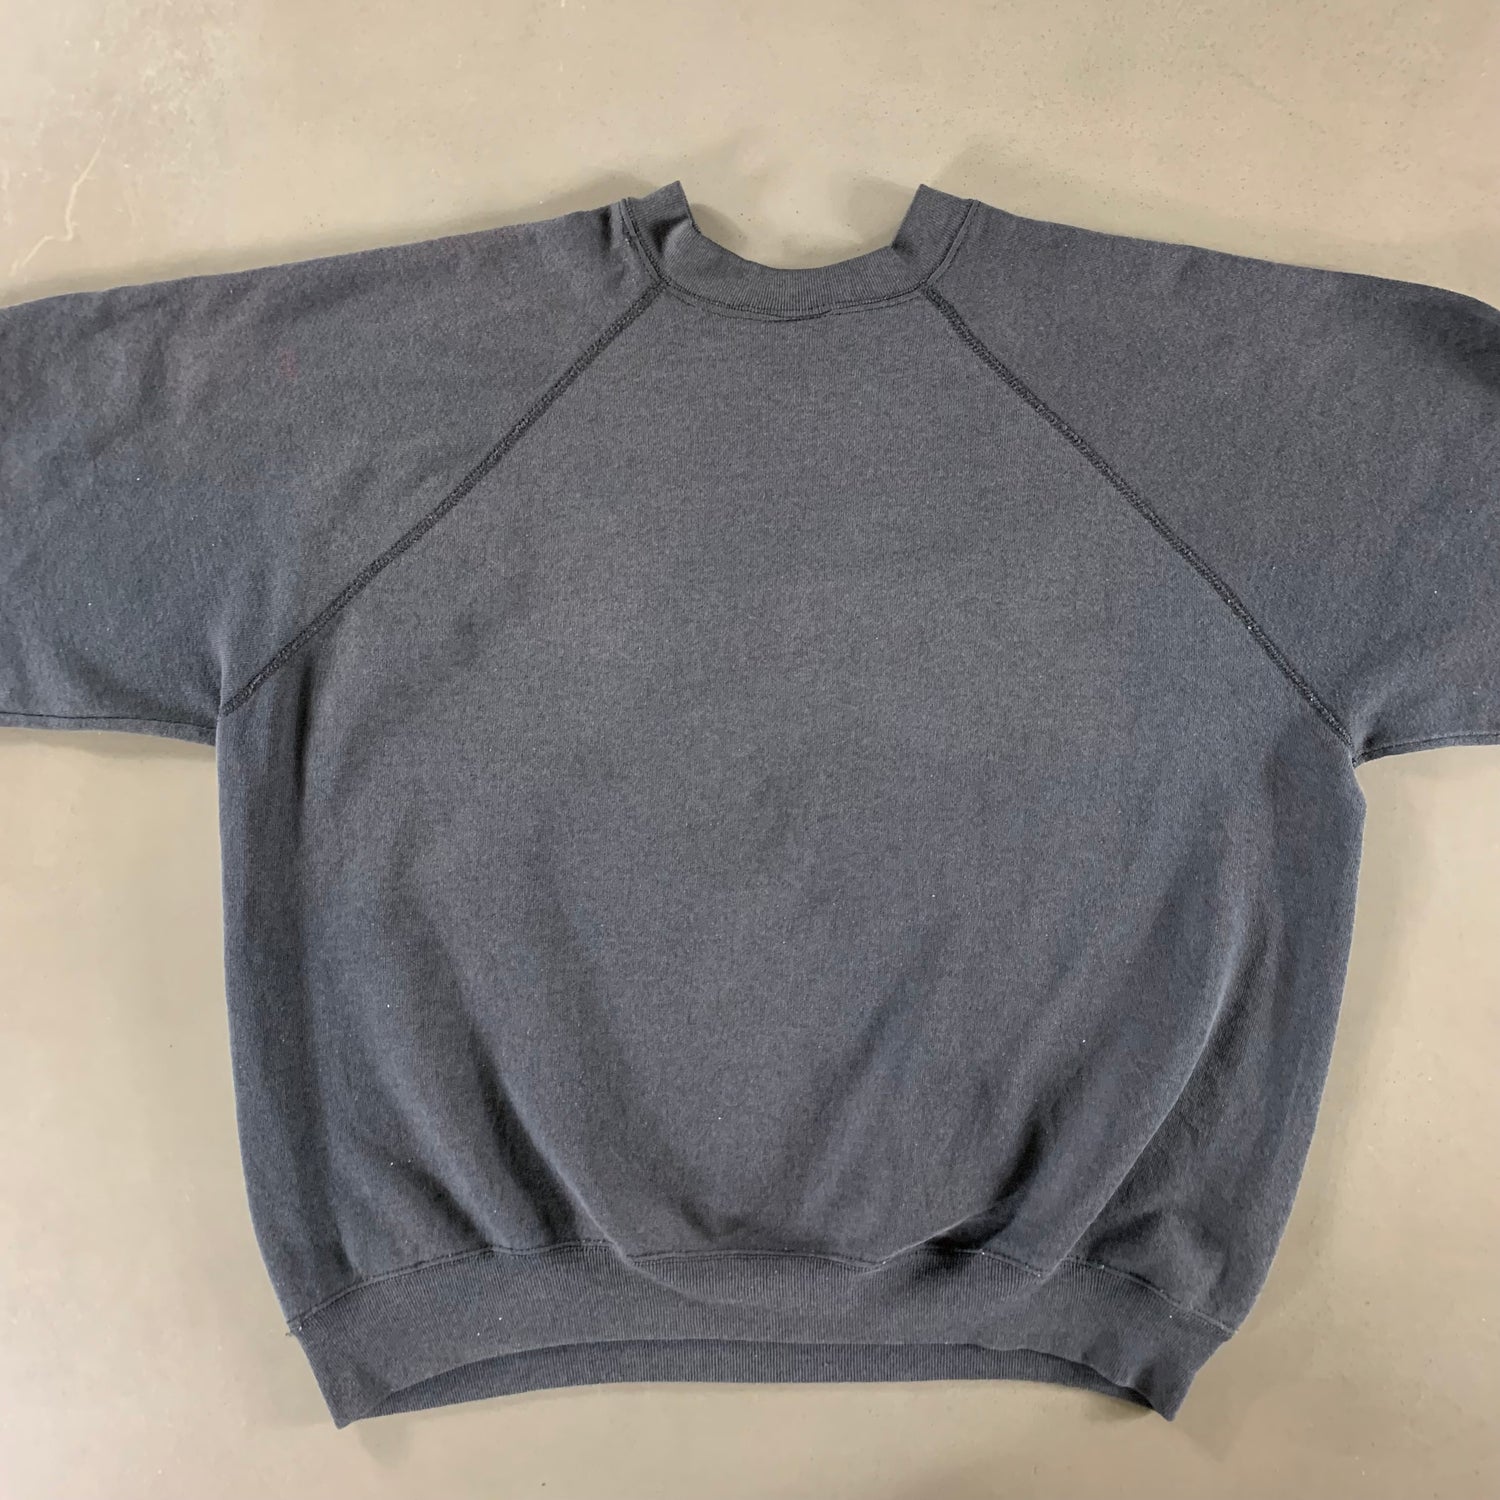 Vintage 1990s US Army Sweatshirt size XL